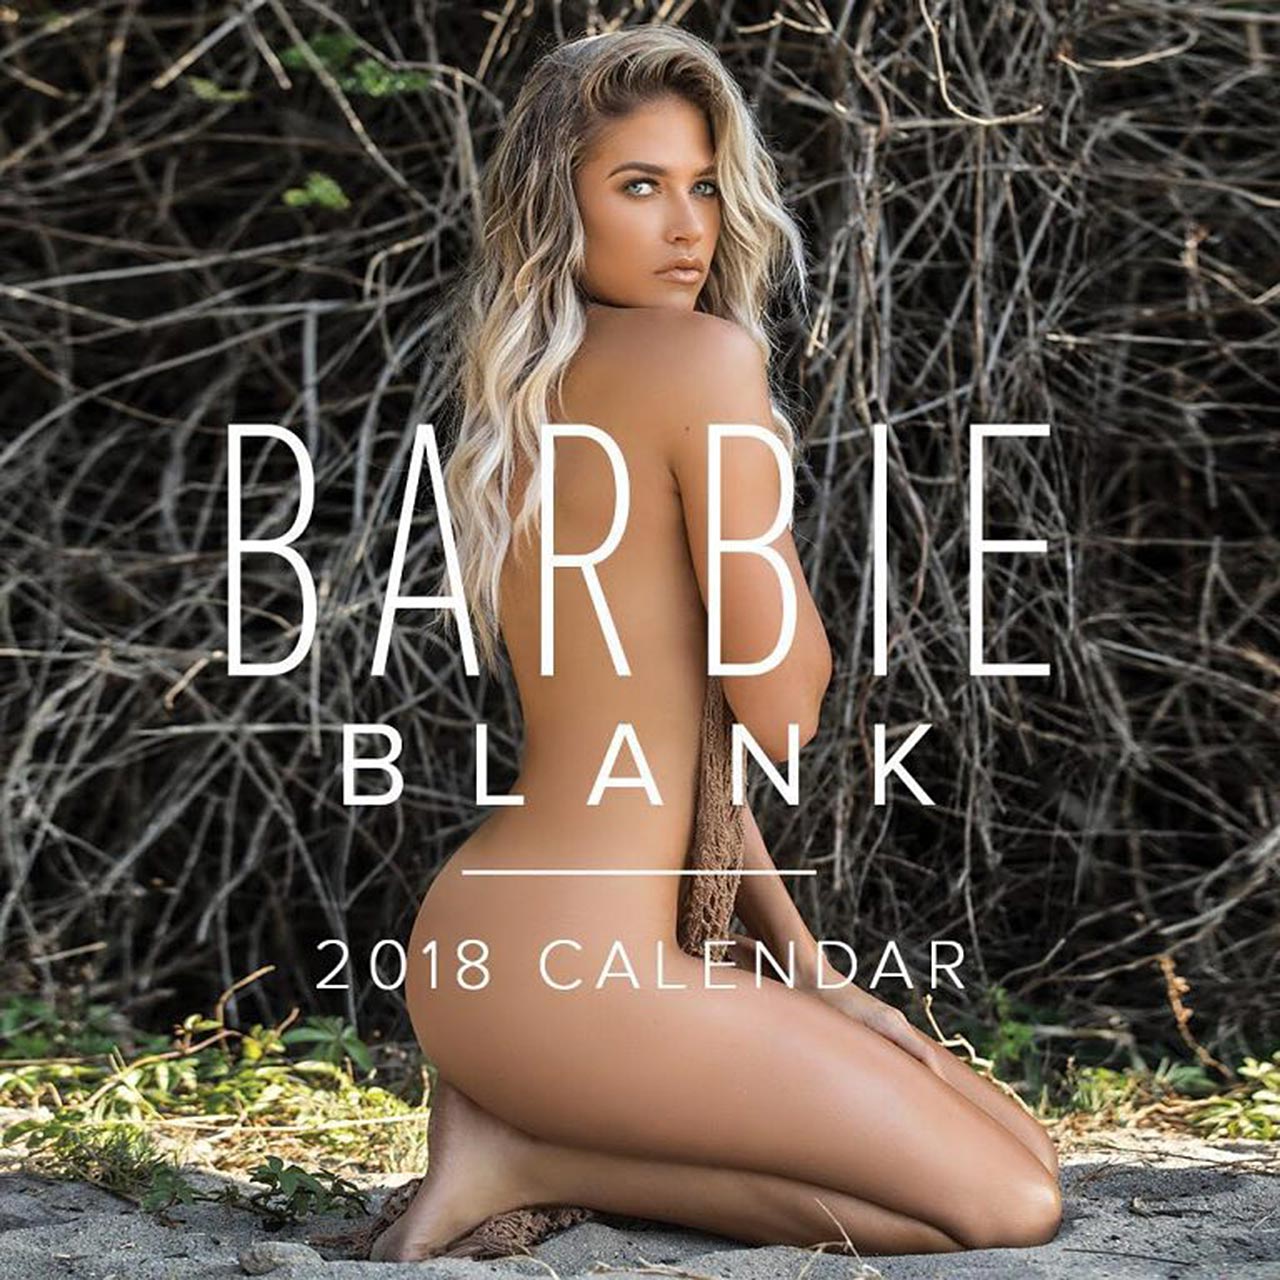 Barbara jean barbie blank nude